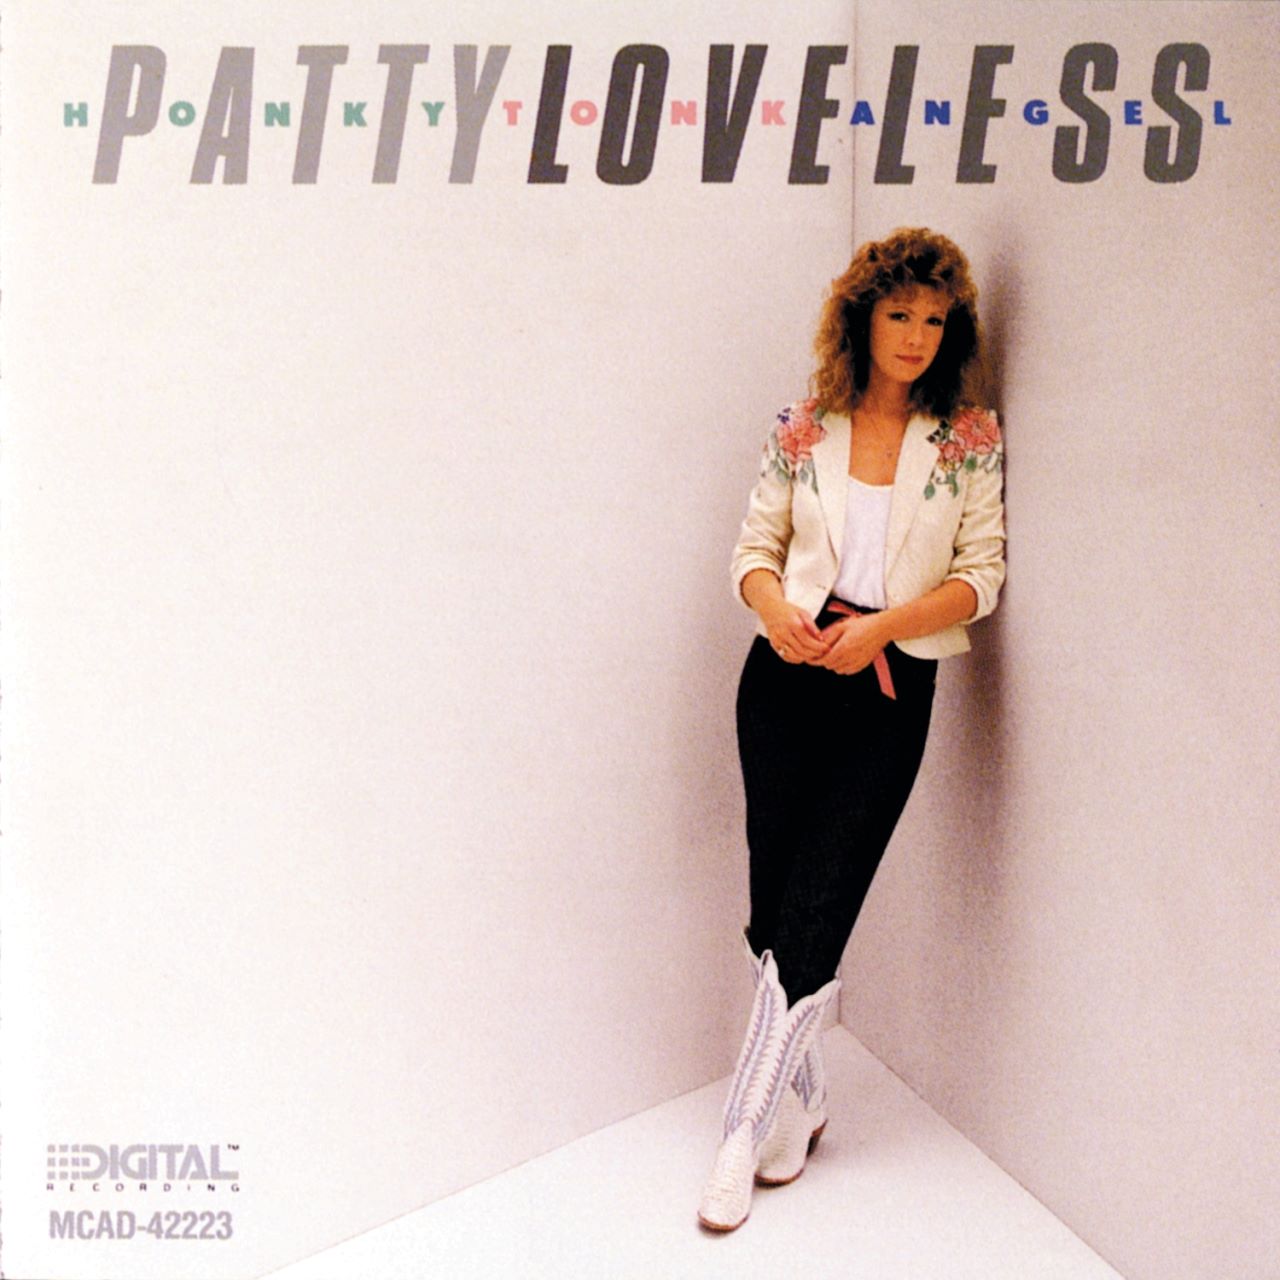 Patty Loveless – Honky Tonk Angel cover album